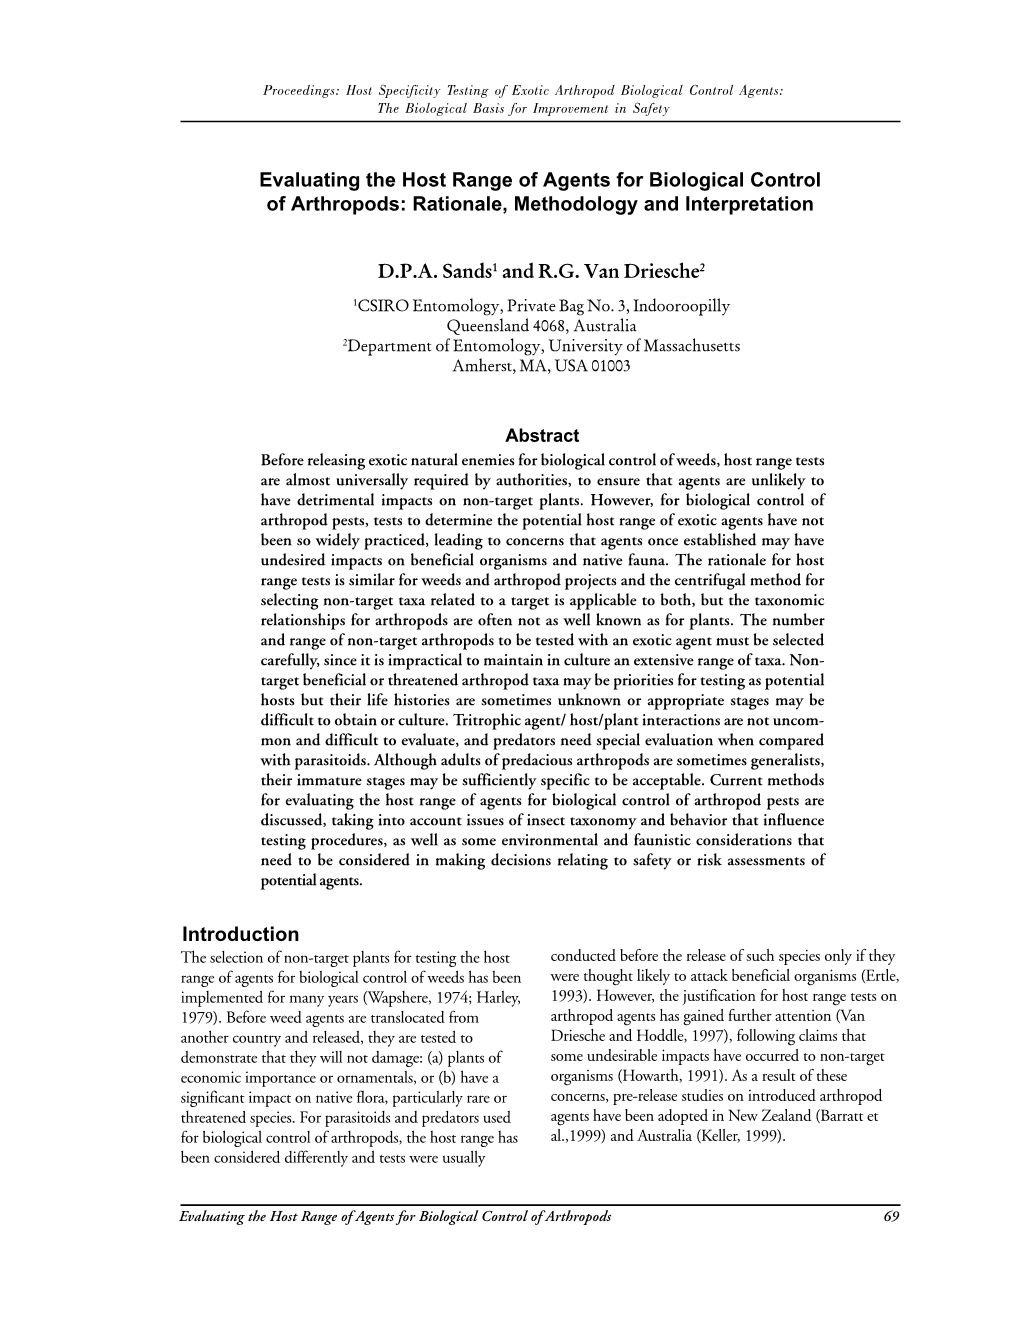 Evaluating the Host Range of Agents for Biological Control of Arthropods: Rationale, Methodology and Interpretation